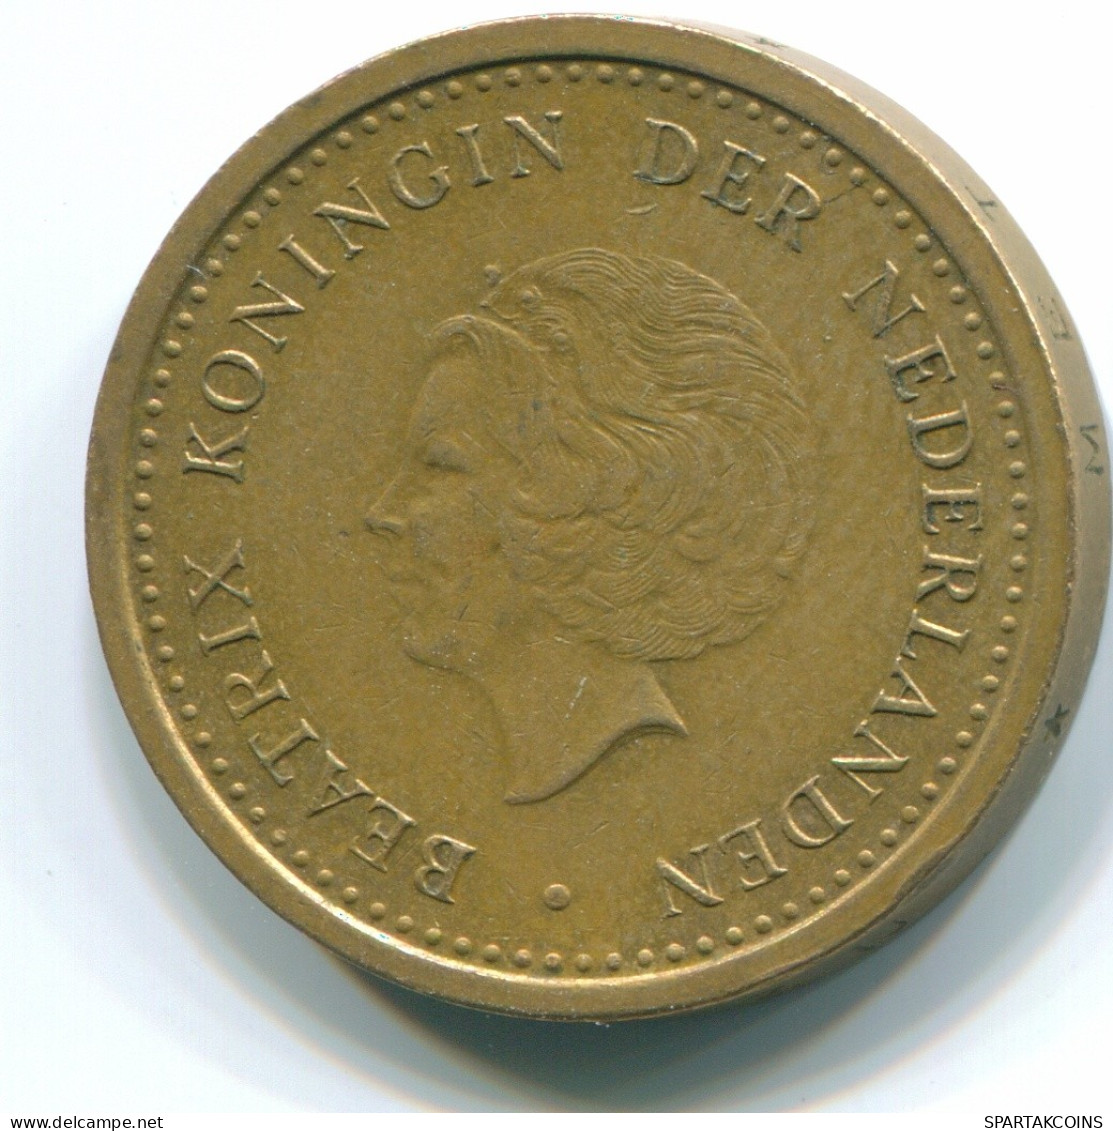 1 GULDEN 1990 NETHERLANDS ANTILLES Aureate Steel Colonial Coin #S12104.U.A - Netherlands Antilles